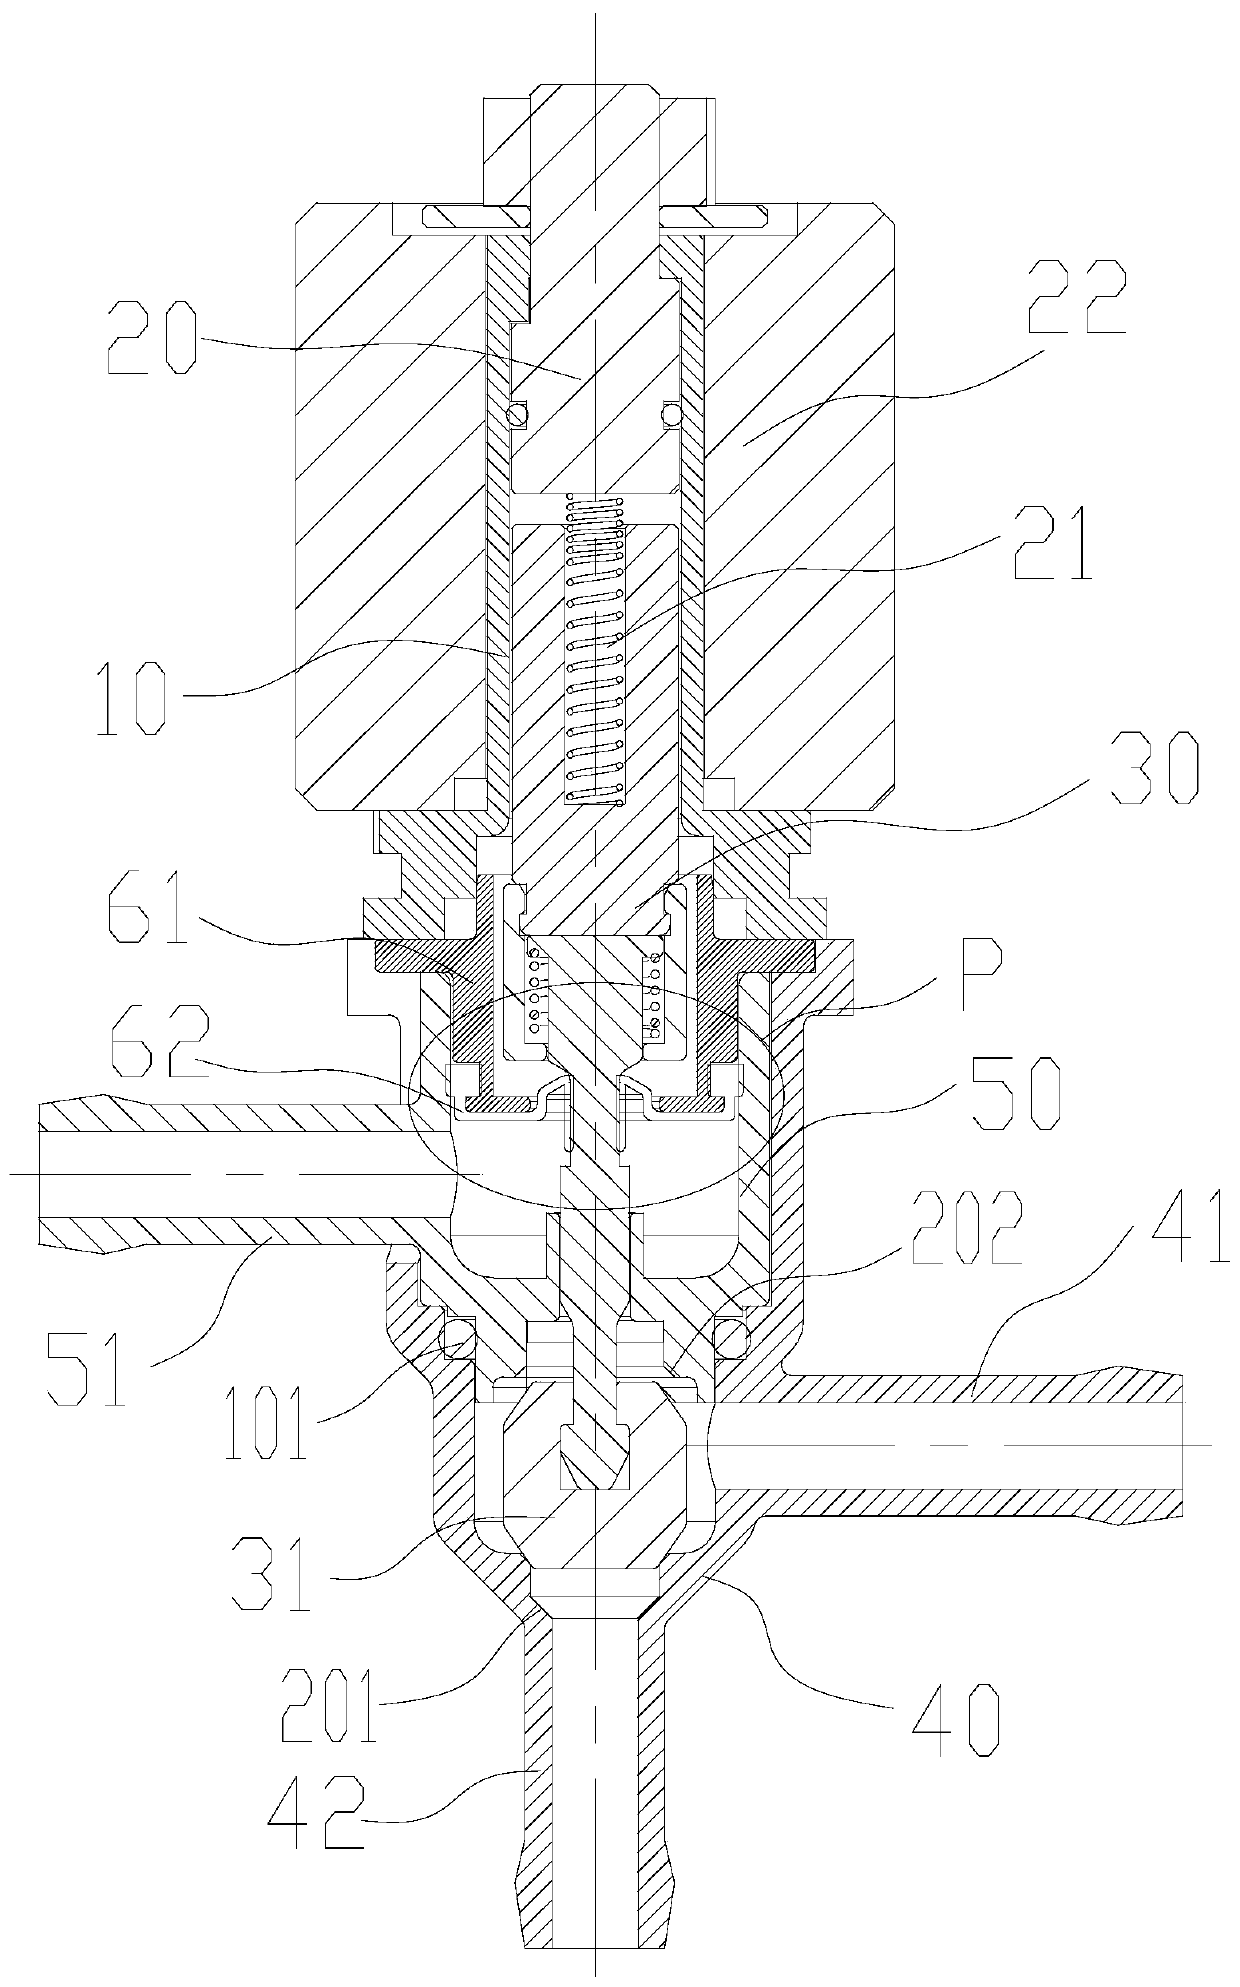 Two-position three-way solenoid valve